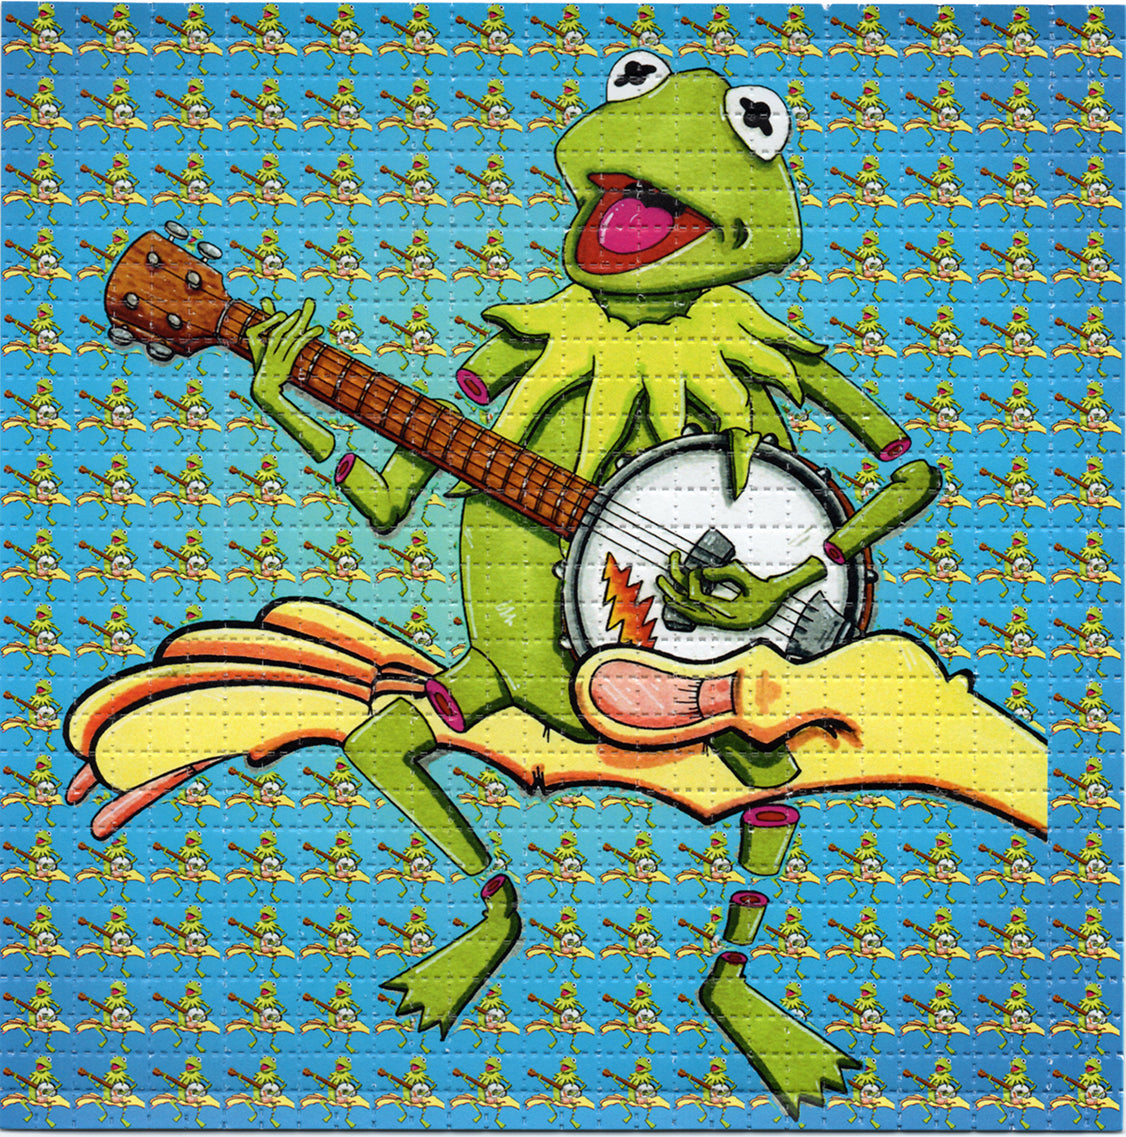 Kermit by Brian Miller Limited Edition LSD blotter art print